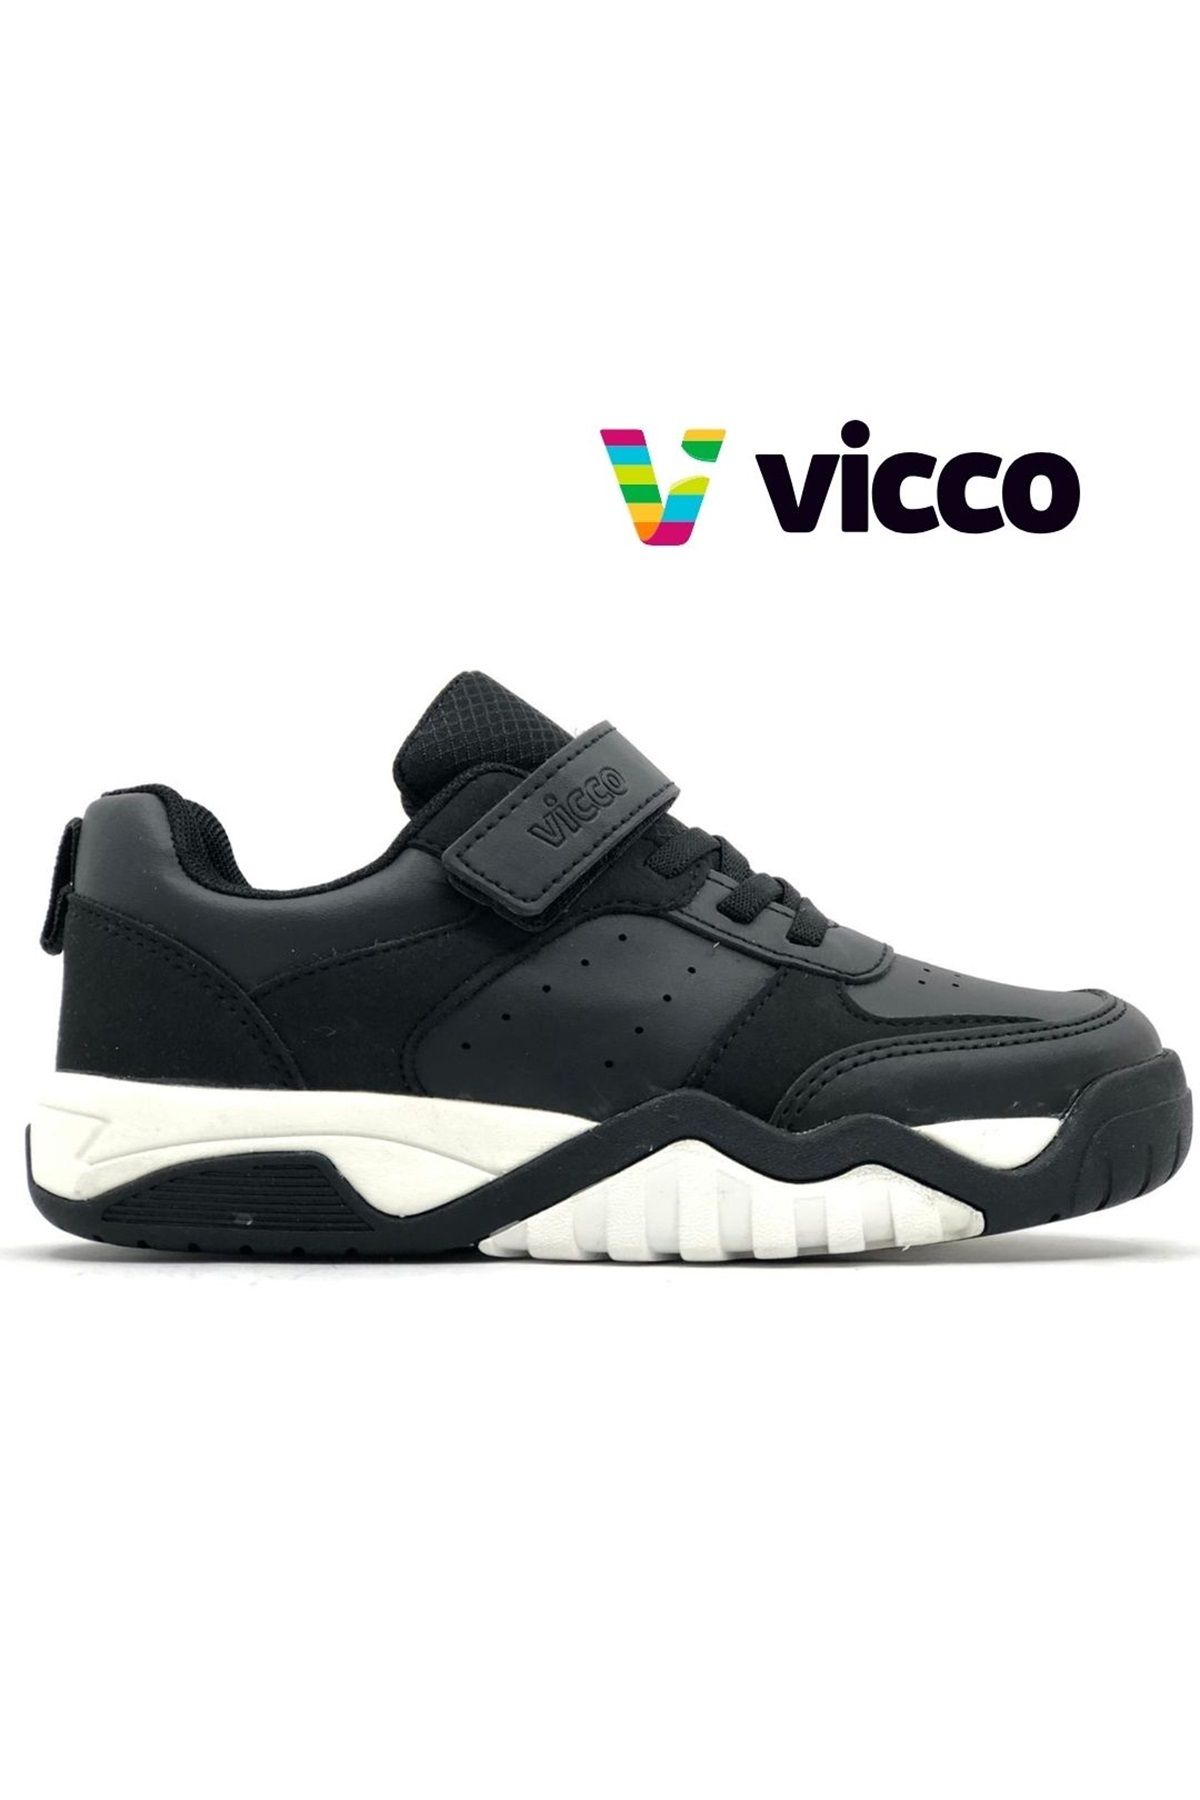 Vicco Maxi Sneaker Ortopedik Çocuk Spor Ayakkabı SİYAH